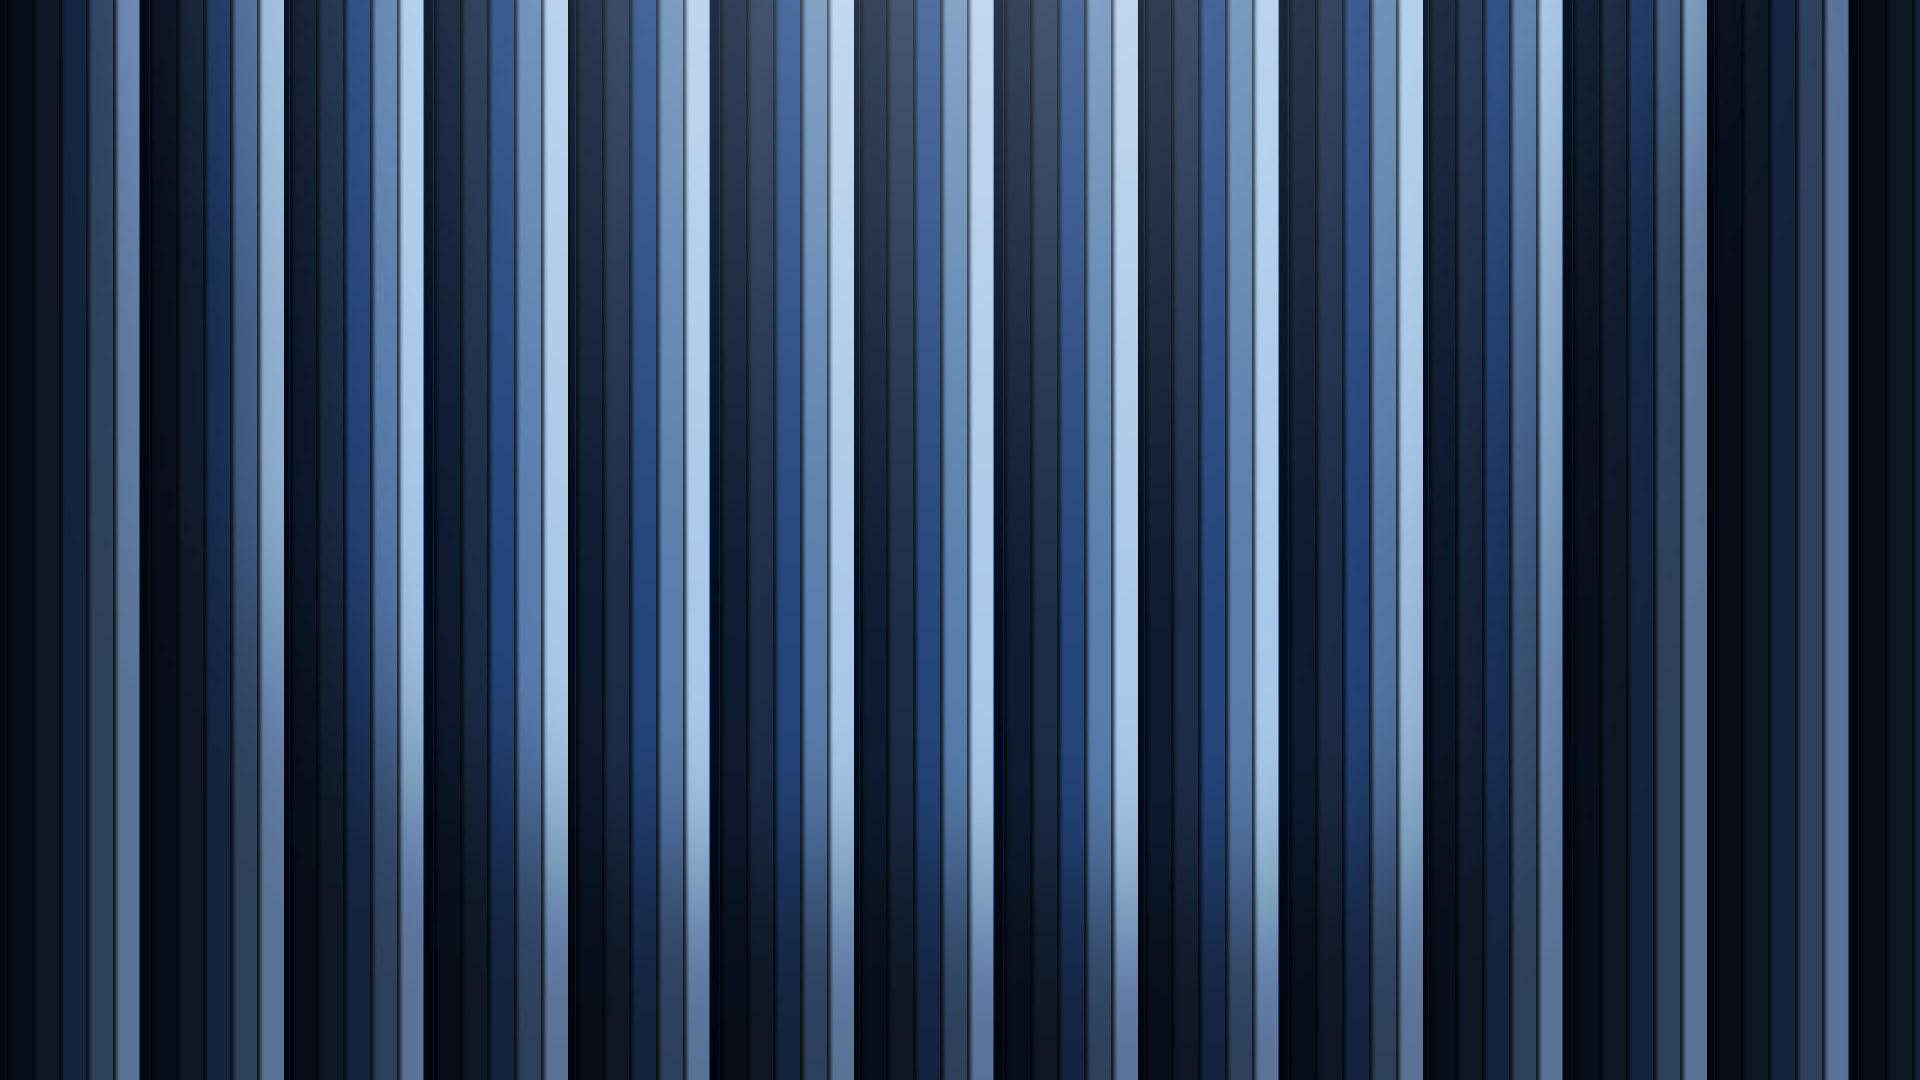 Wallpaper Puter Stripe Blue Blues Desktop Stripes